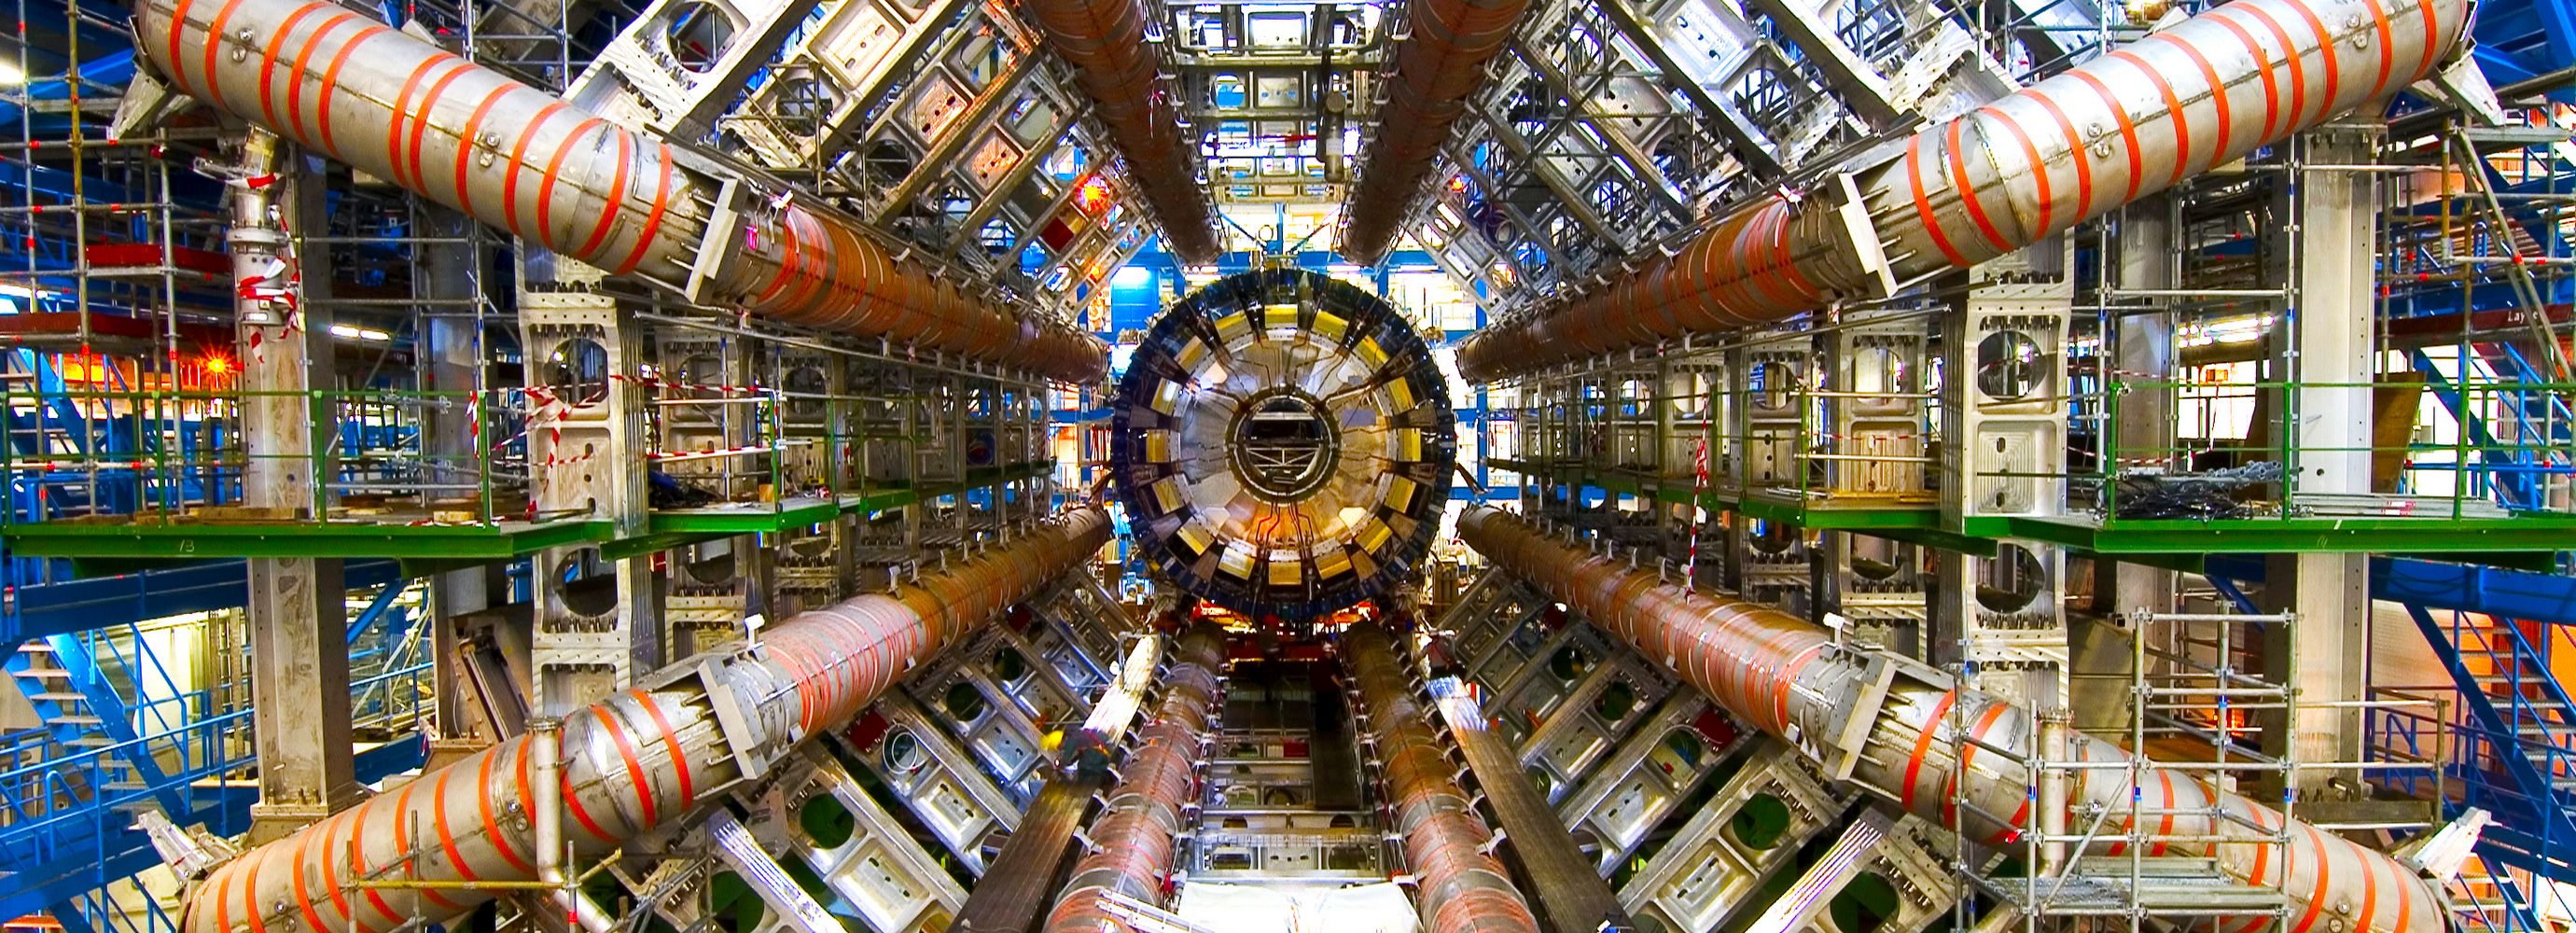 large-hadron-collider-1.jpg